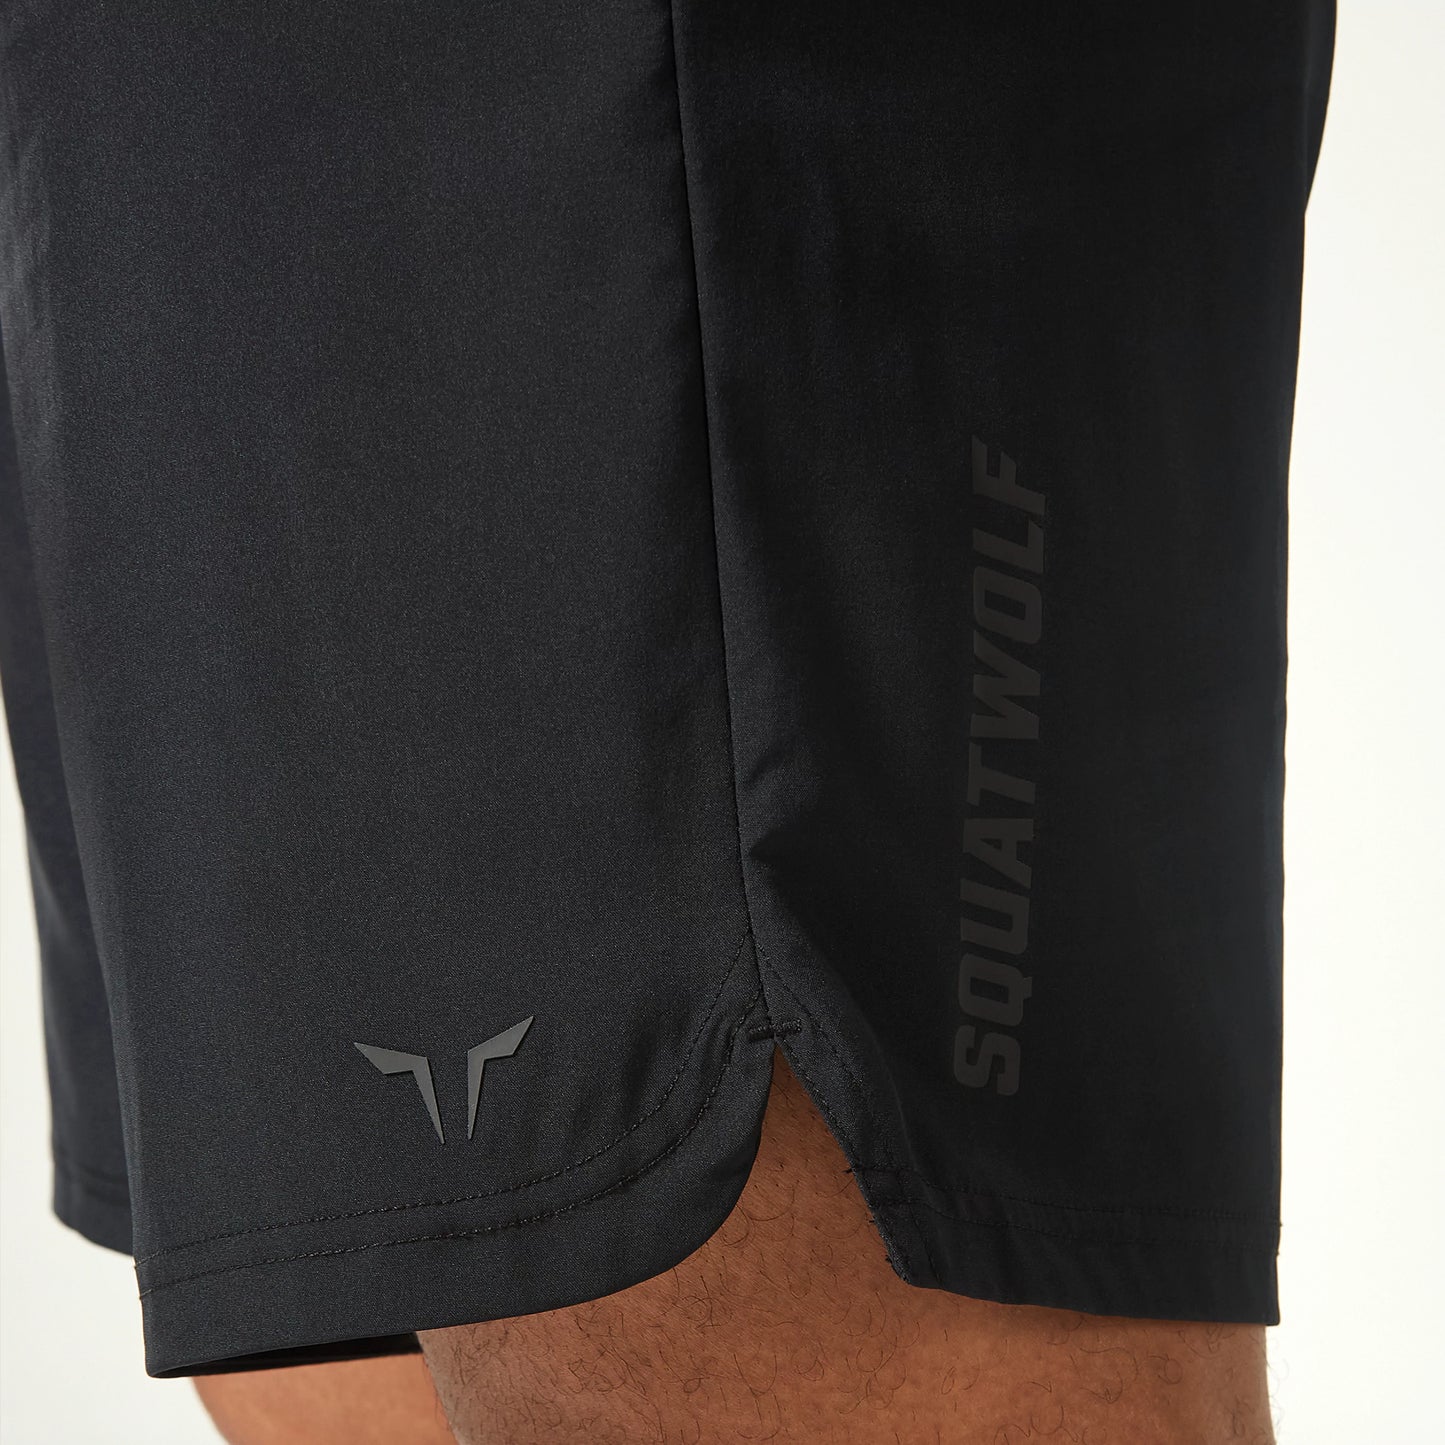 Essential Pro 7 Inch Shorts - Black